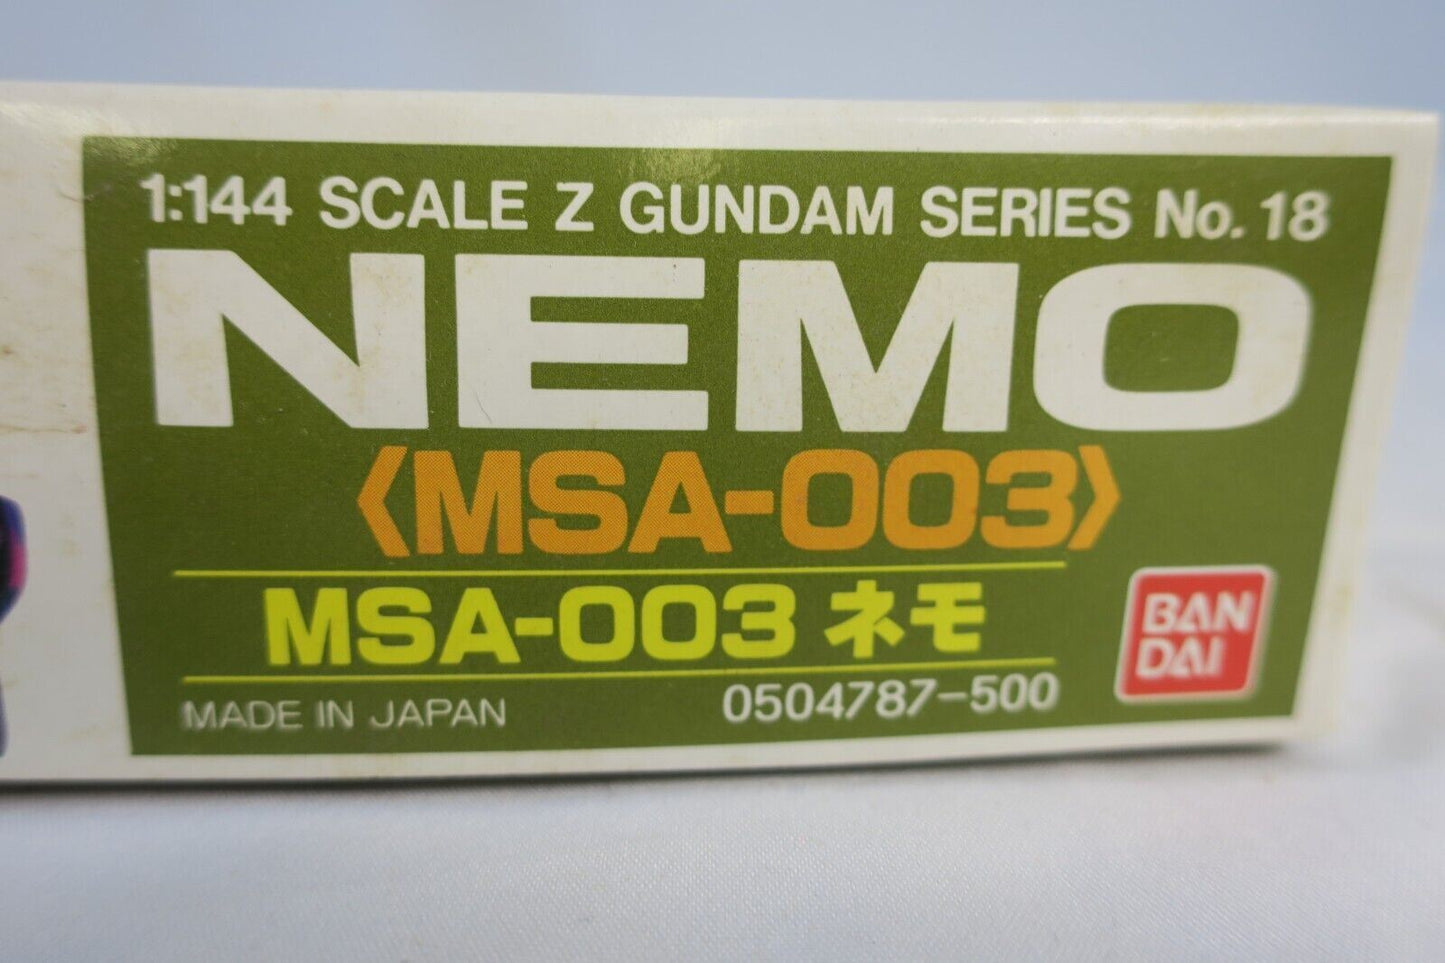 Bandai Z Gundam Series No. 18 Nemo MSA-003 1/144 Model Kit 0504787-500 C13